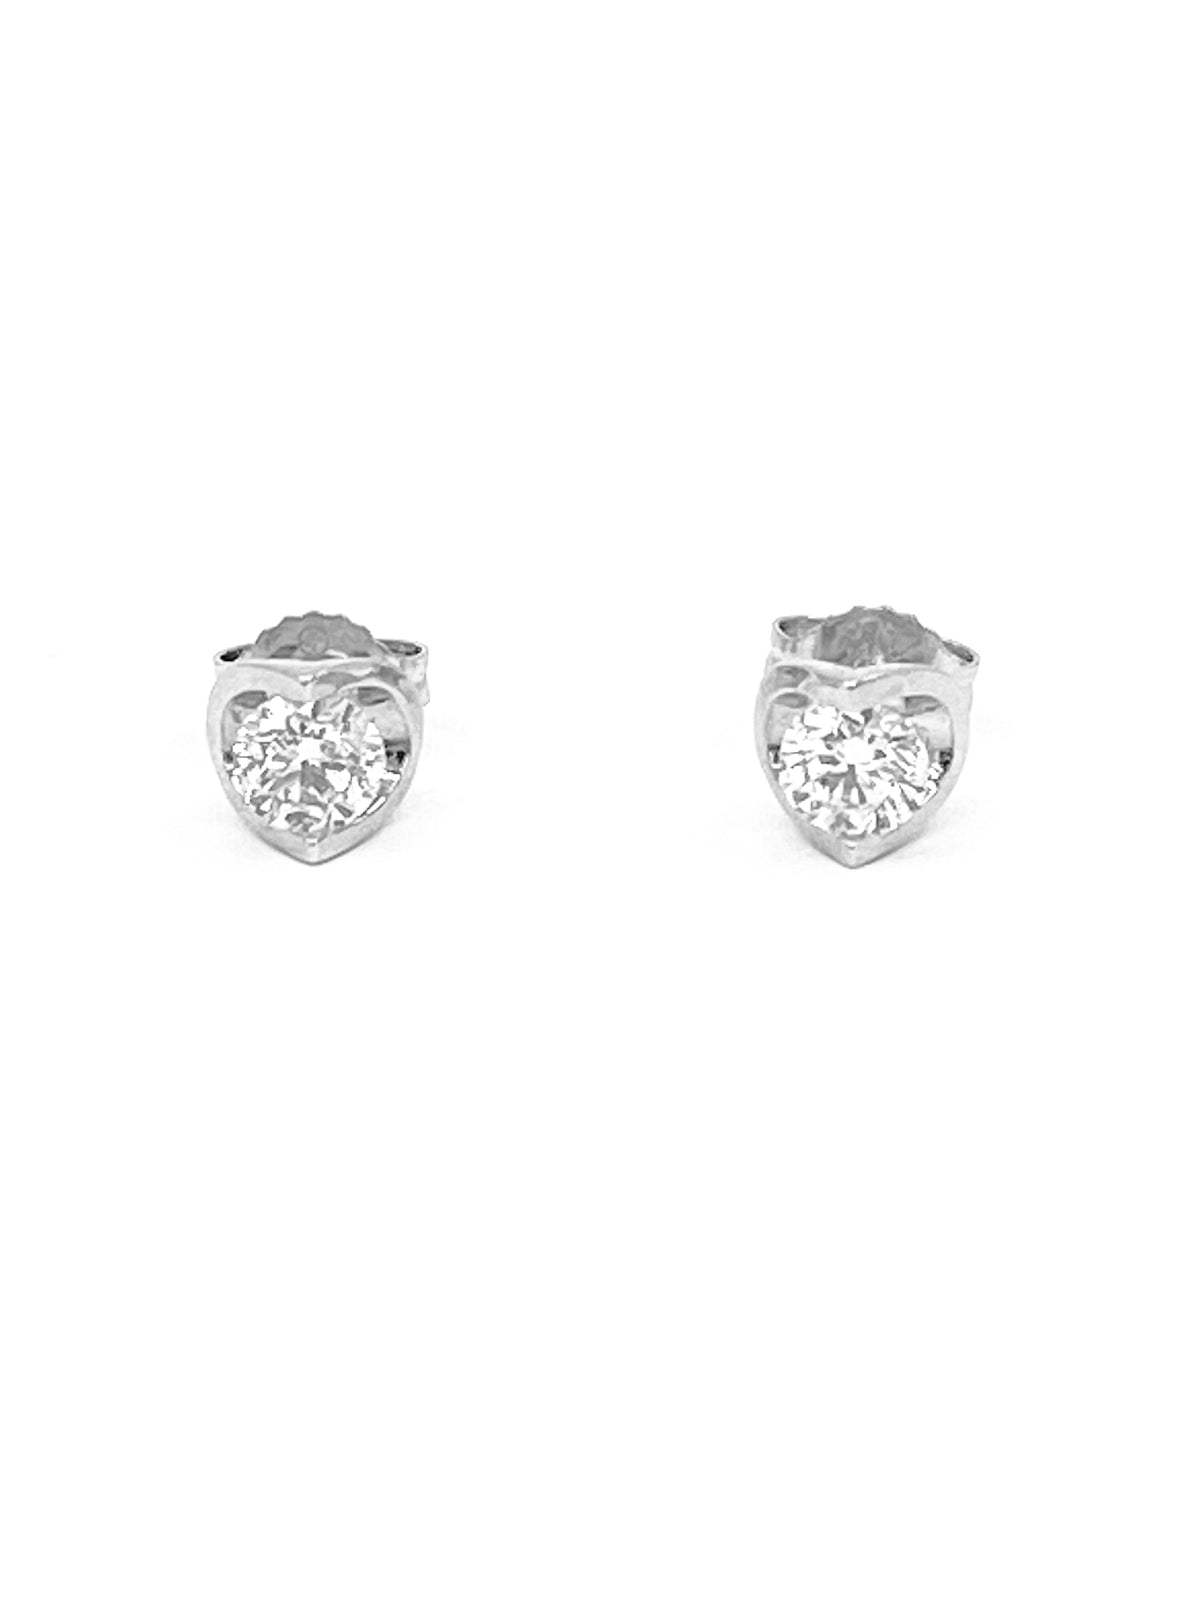 14K White Gold 0.70cttw Round Cut Canadian Diamond Stud Earrings